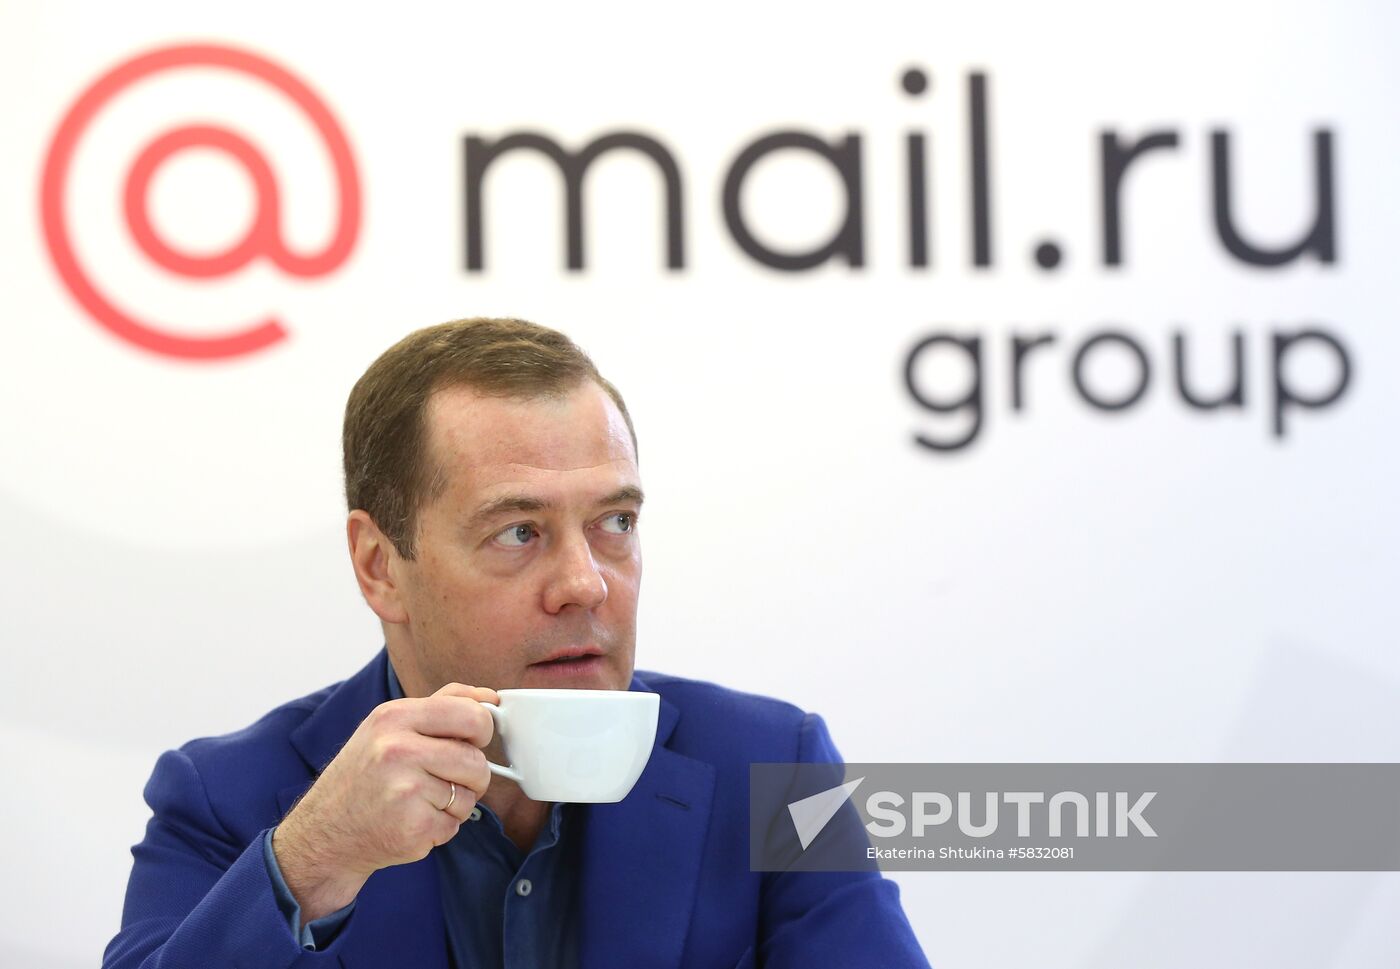 Russia Medvedev Internet